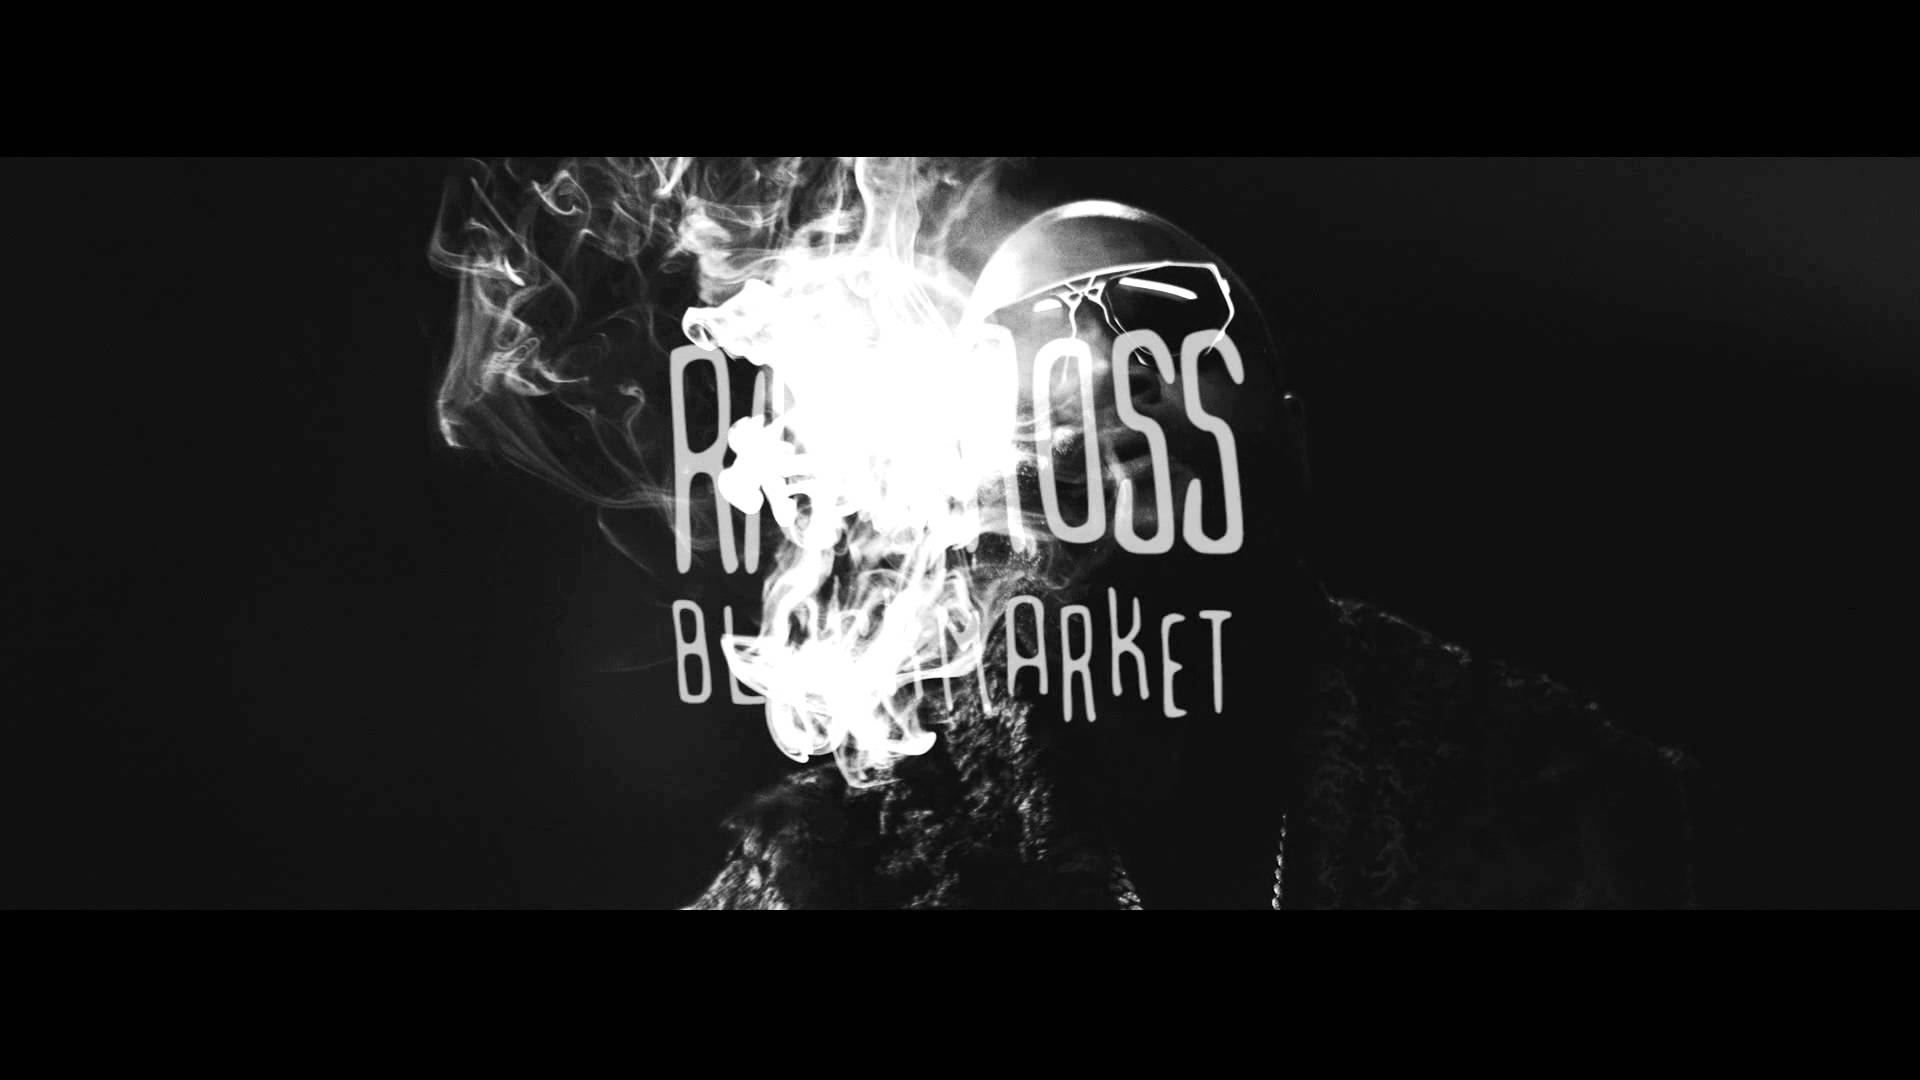 black market rick ross album download